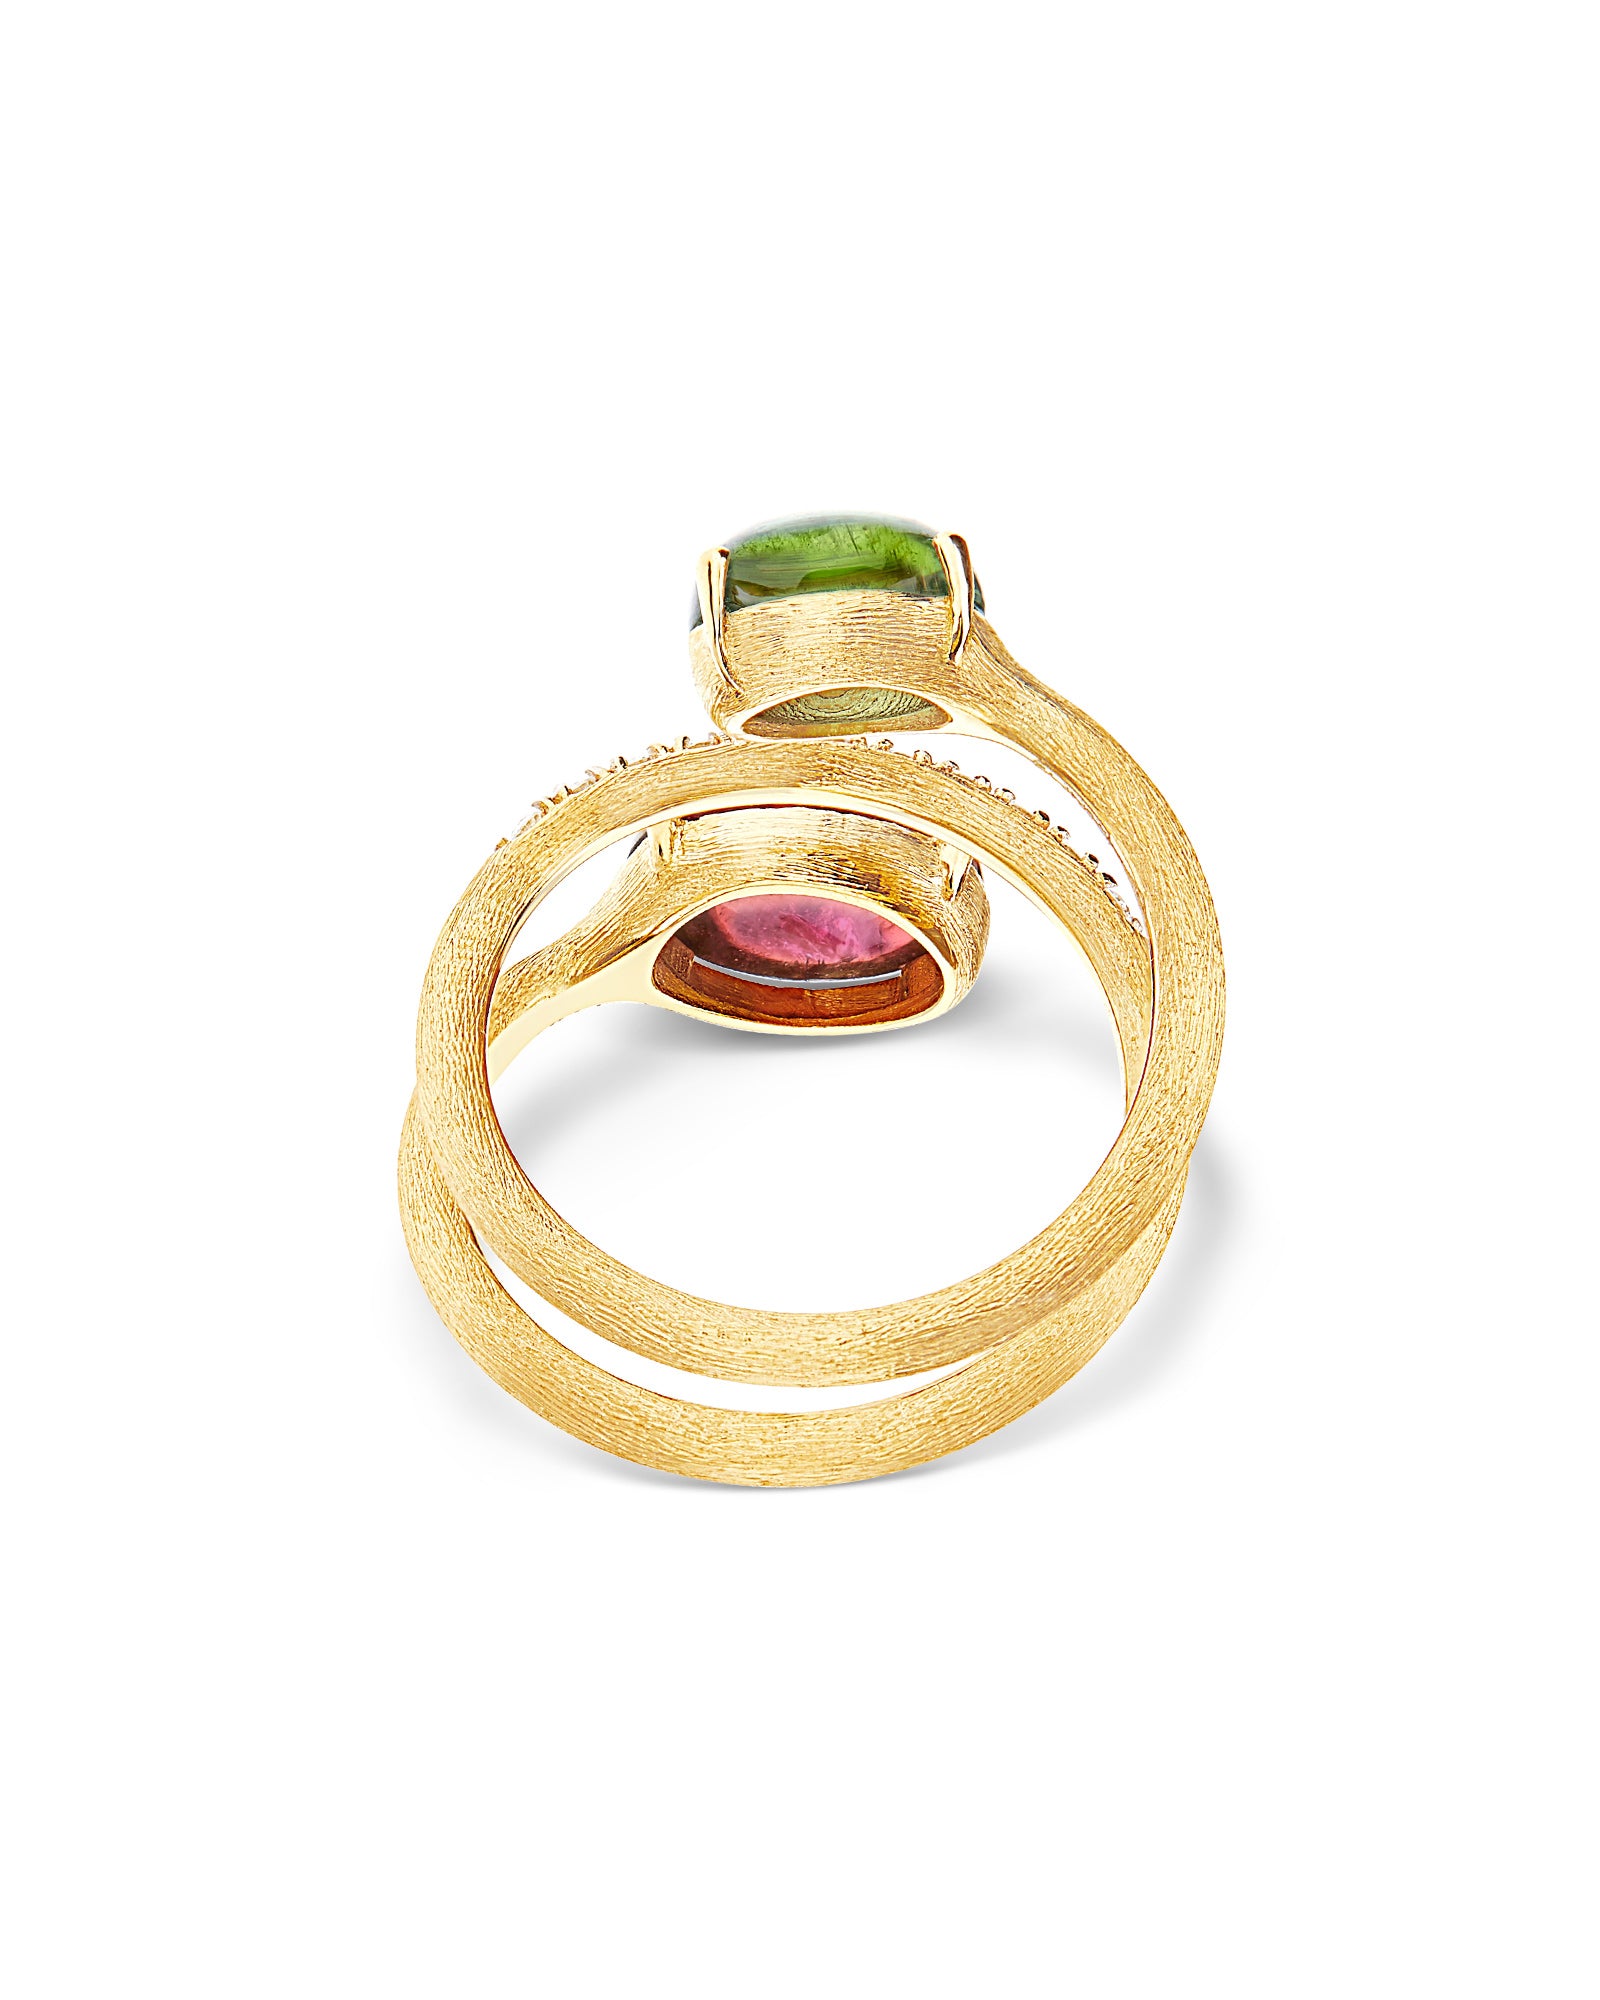 "Tourmalines" Gold, Diamonds, Pink and Green tourmalines, spiral ring